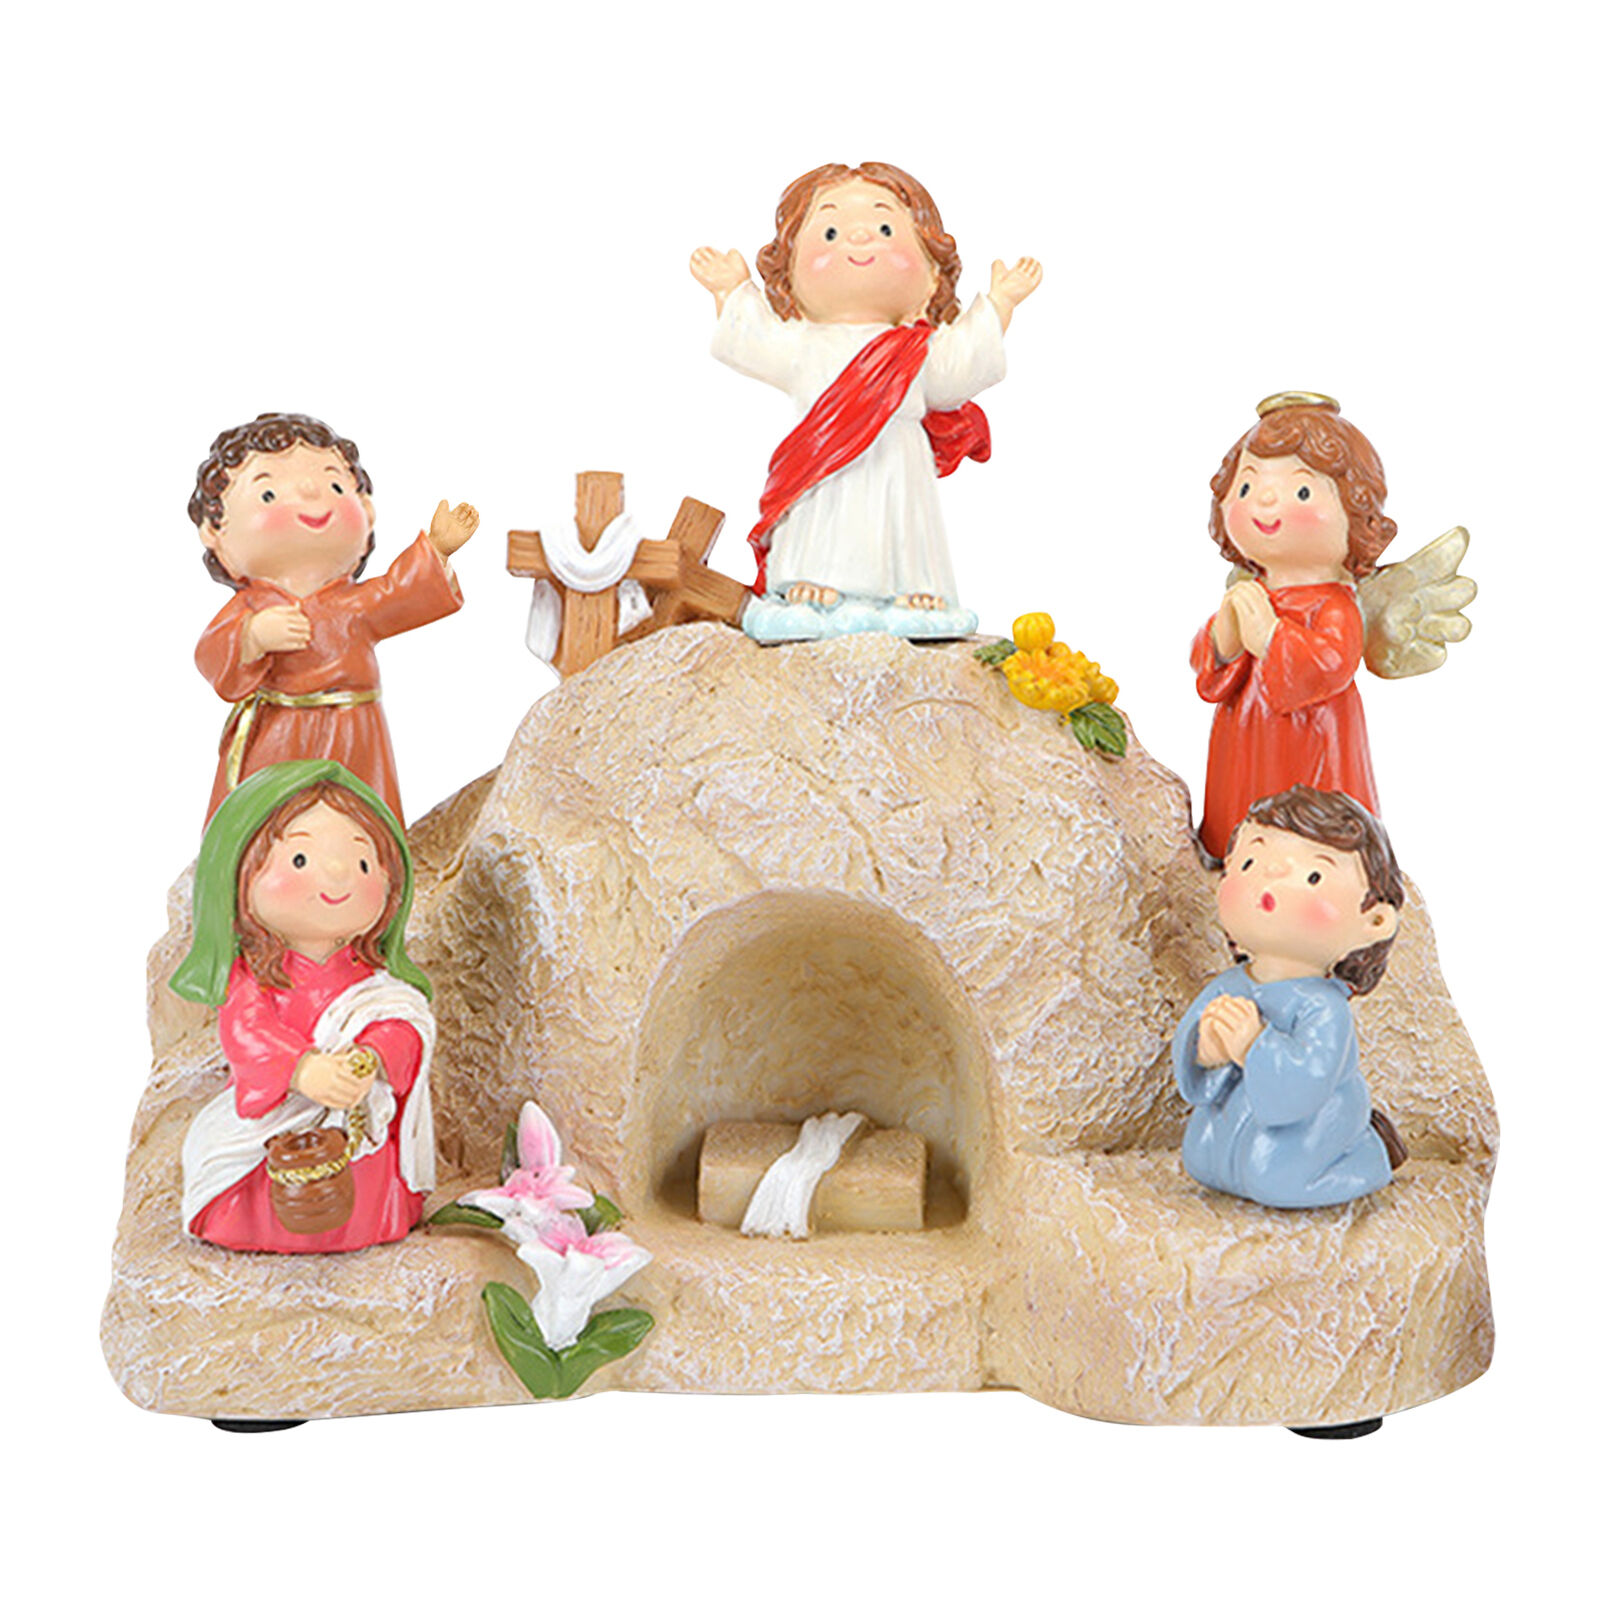 The Ascension Day of Jesus Scene Ornaments,Religious Resin Figurines Decor